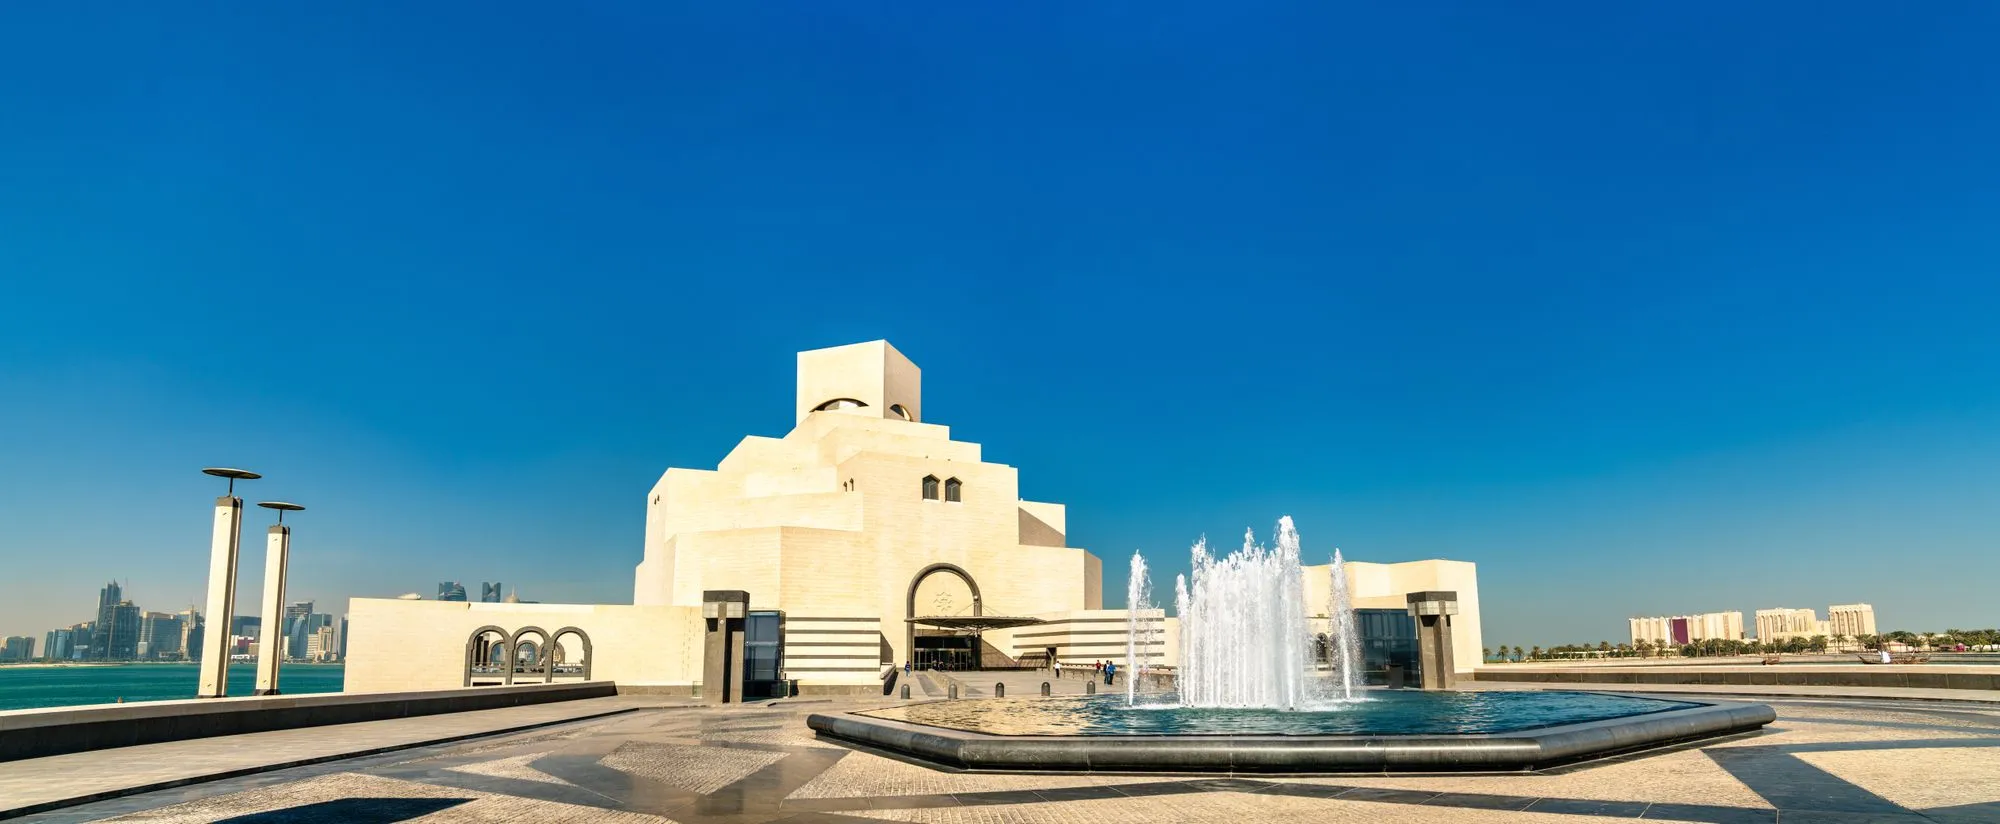 Museum of Islamic Art Park in Doha